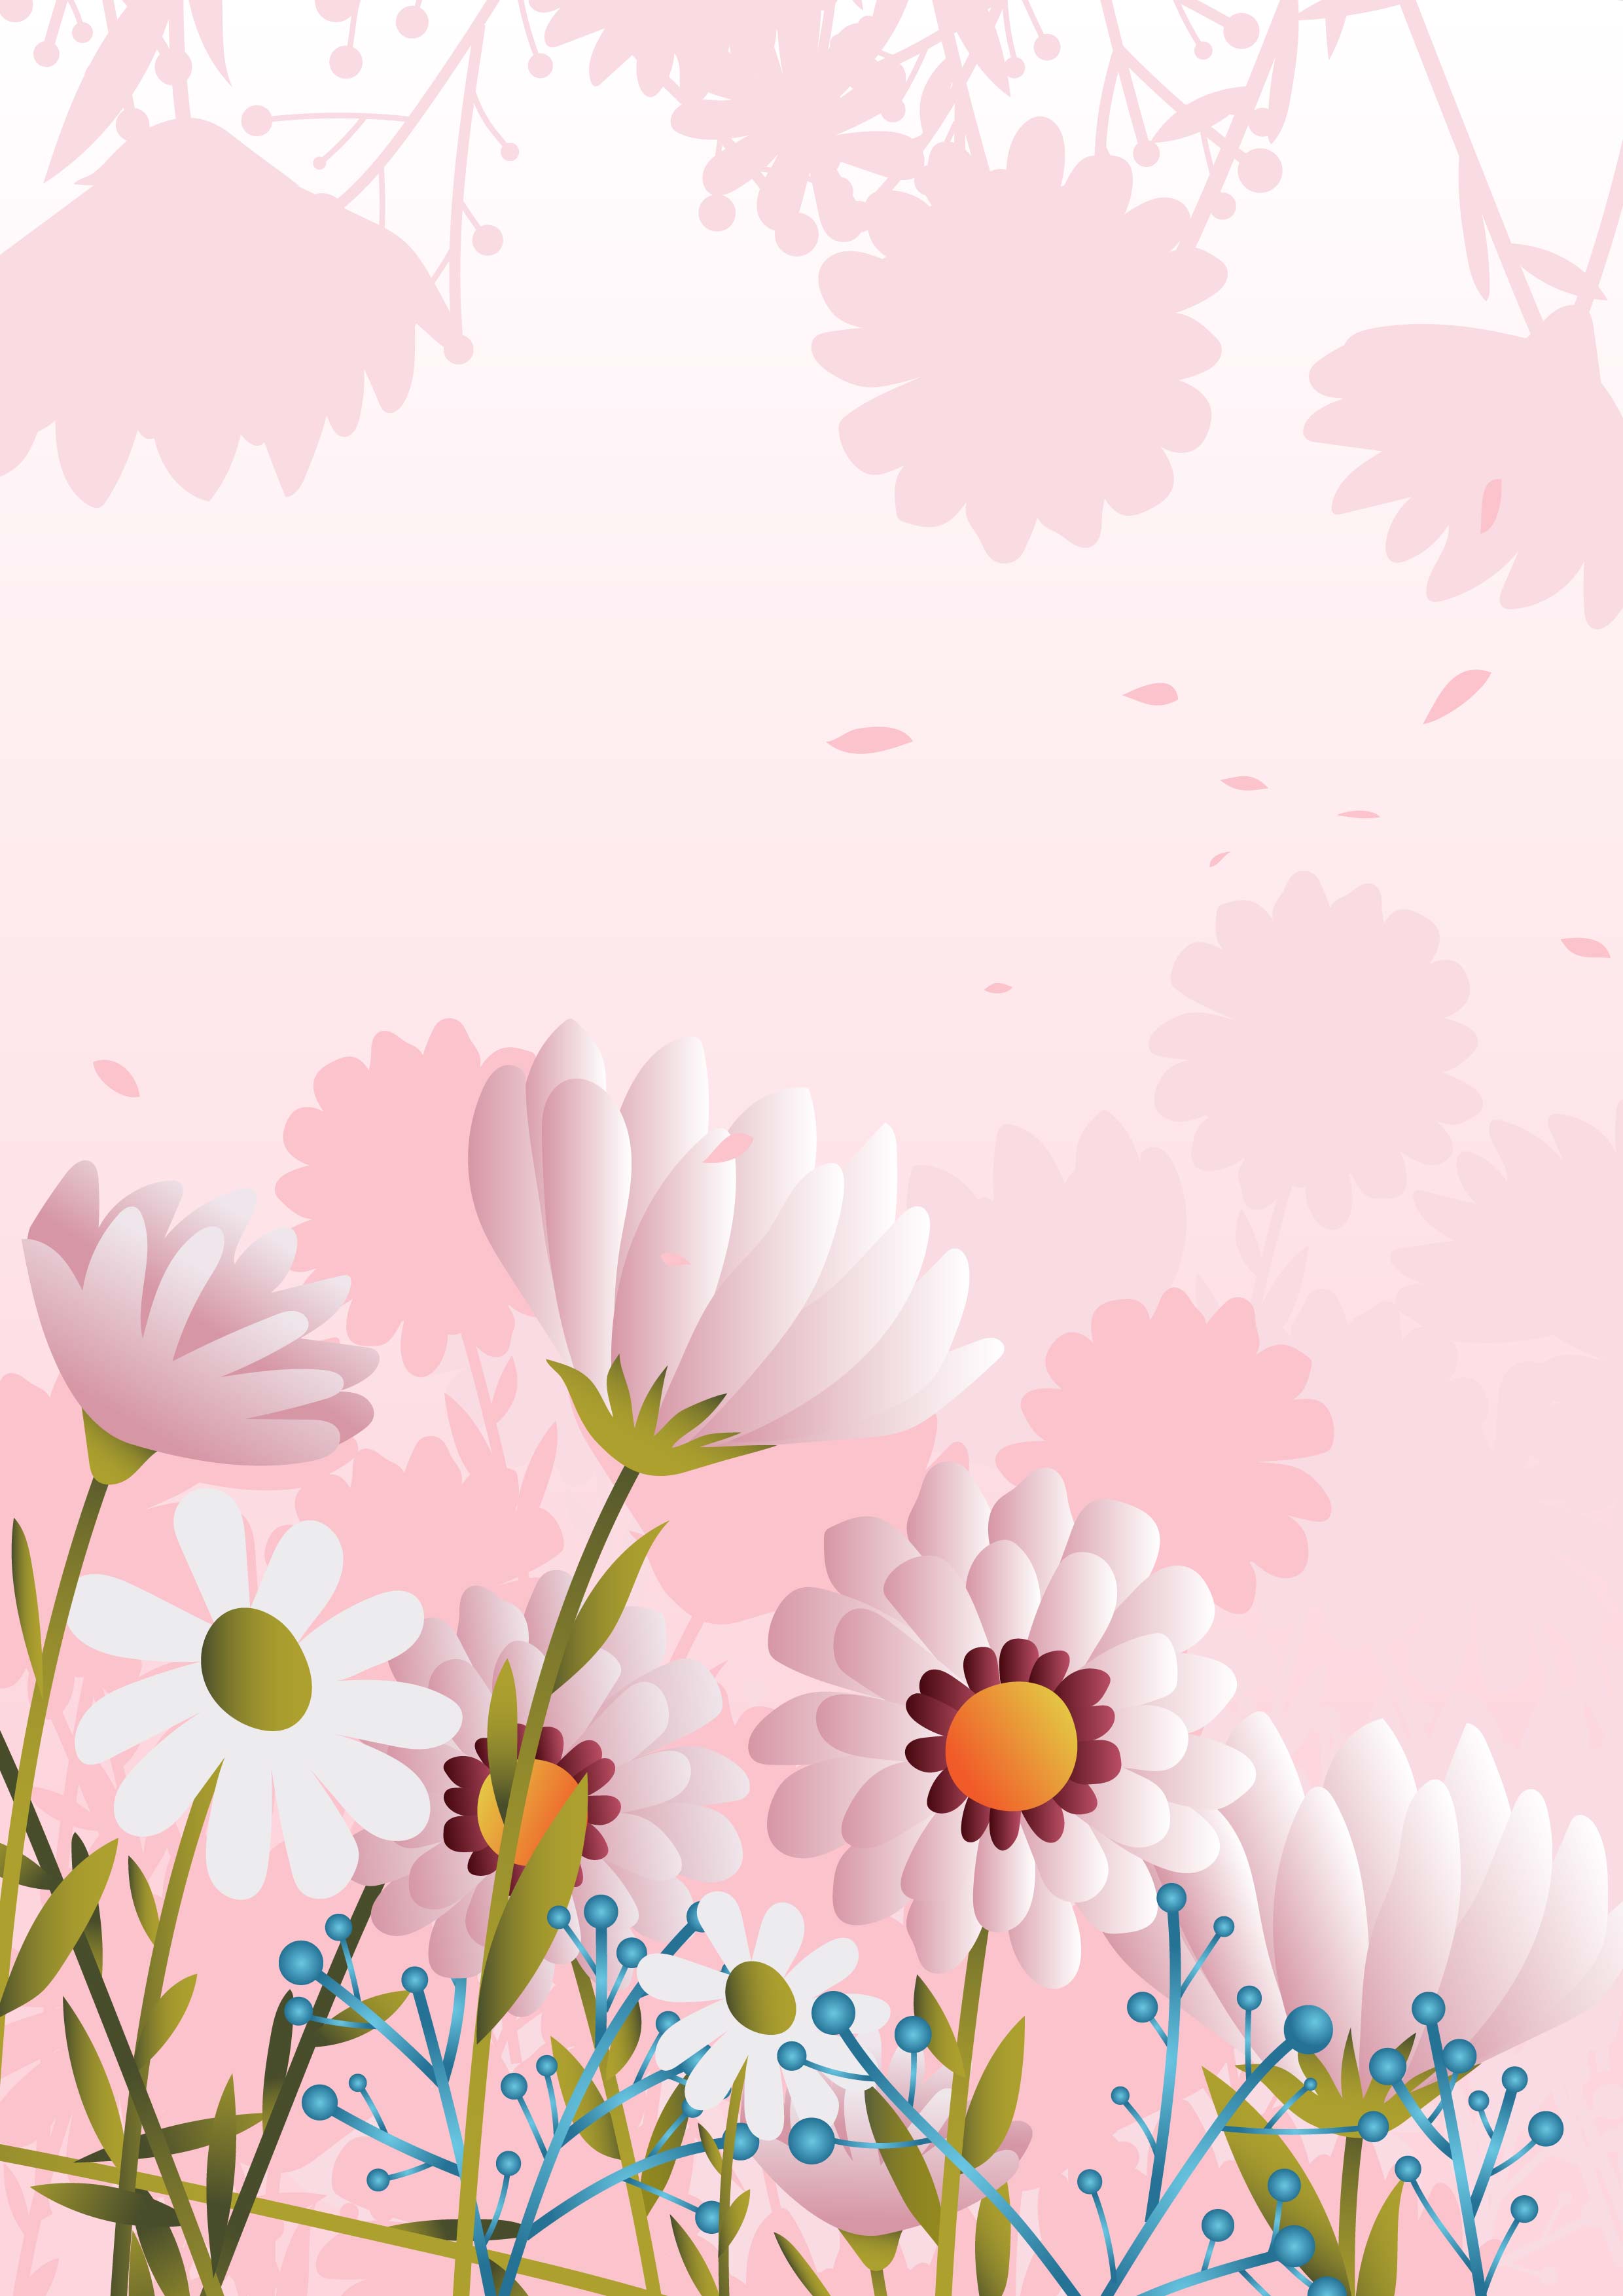 Download Pink Flower Background 286678 - Download Free Vectors ...